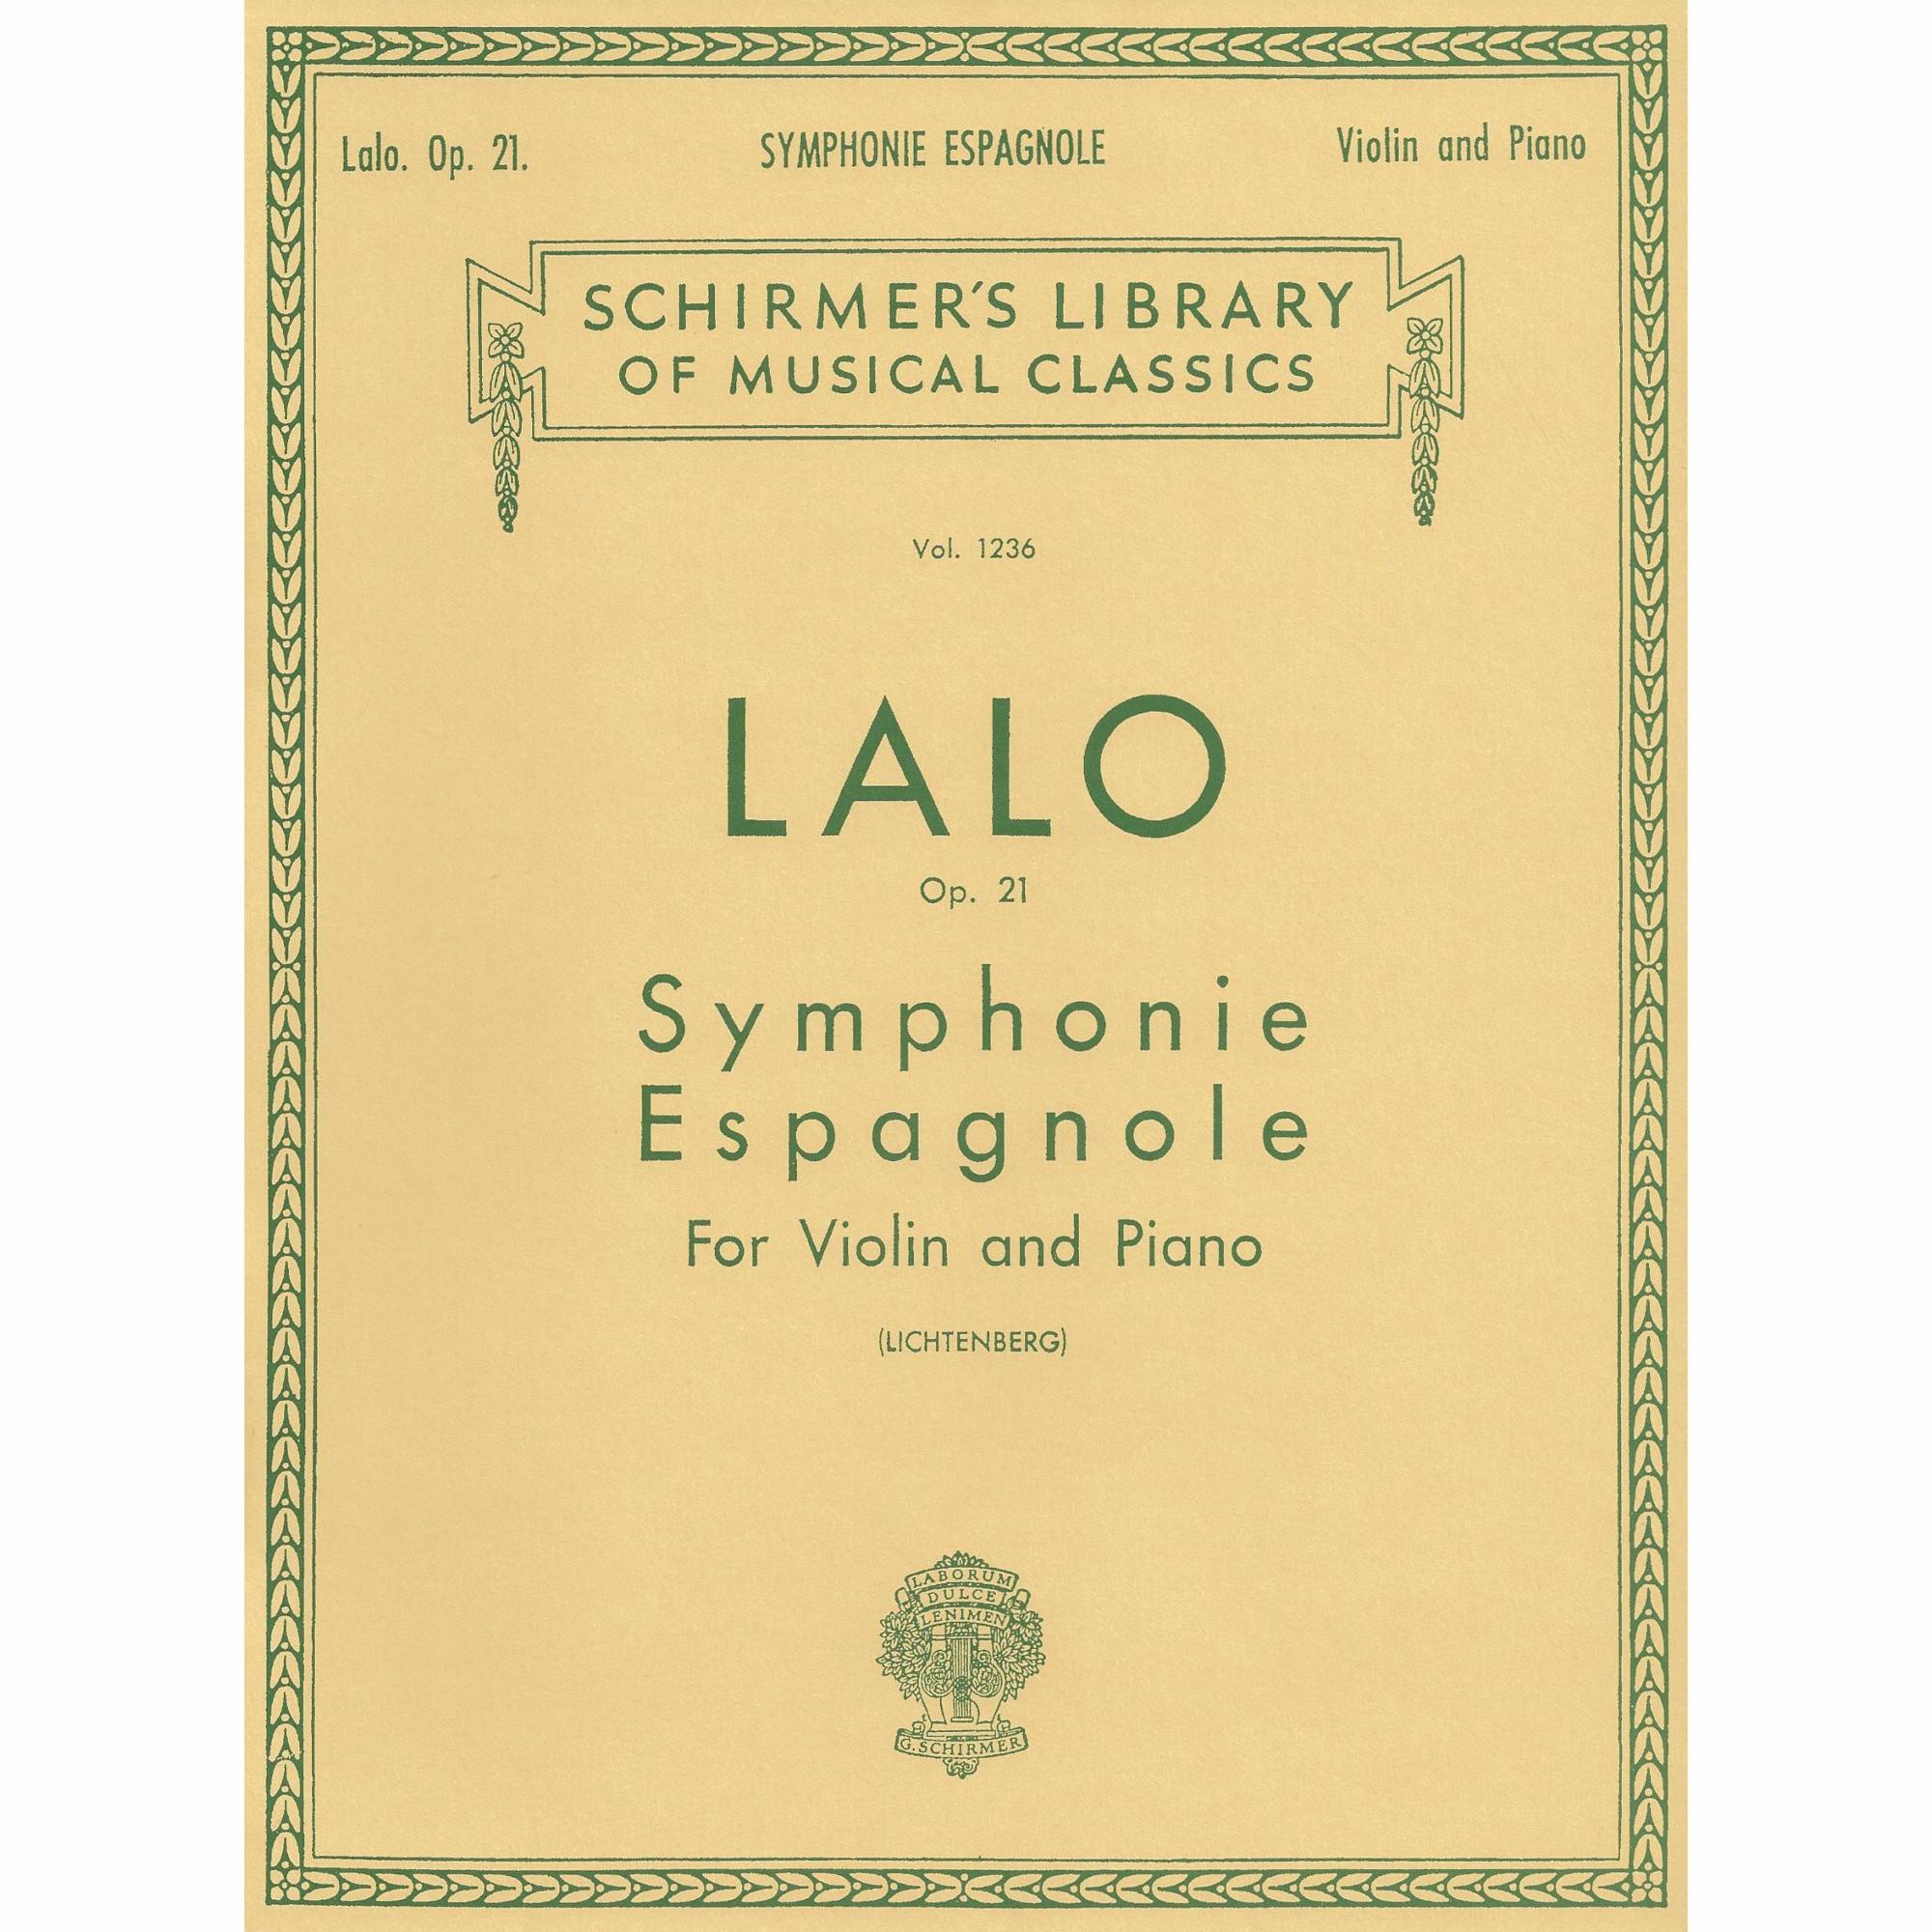 Lalo -- Symphonie Espagnole, Op. 21 for Violin and Piano